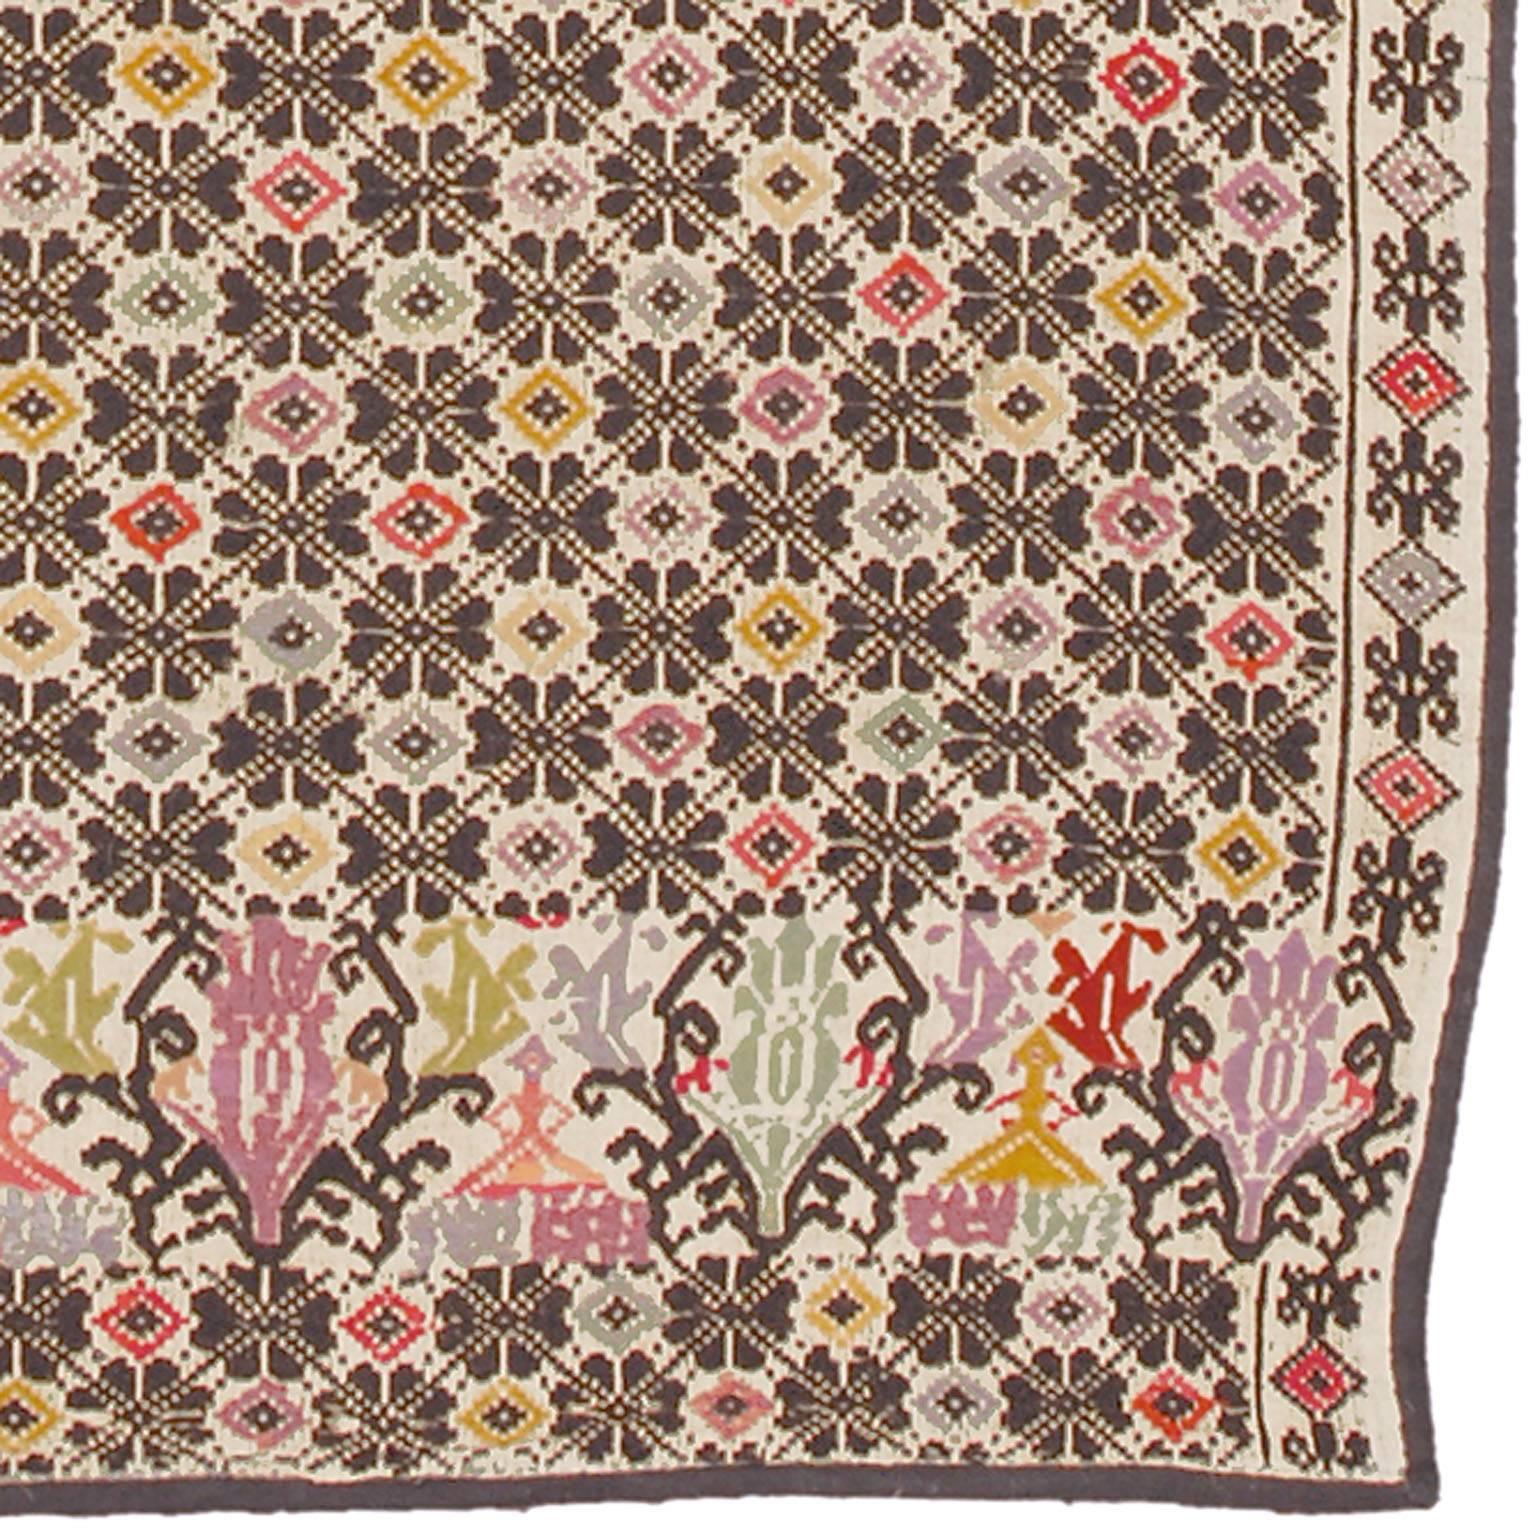 Late 19th century needlepoint carpet.